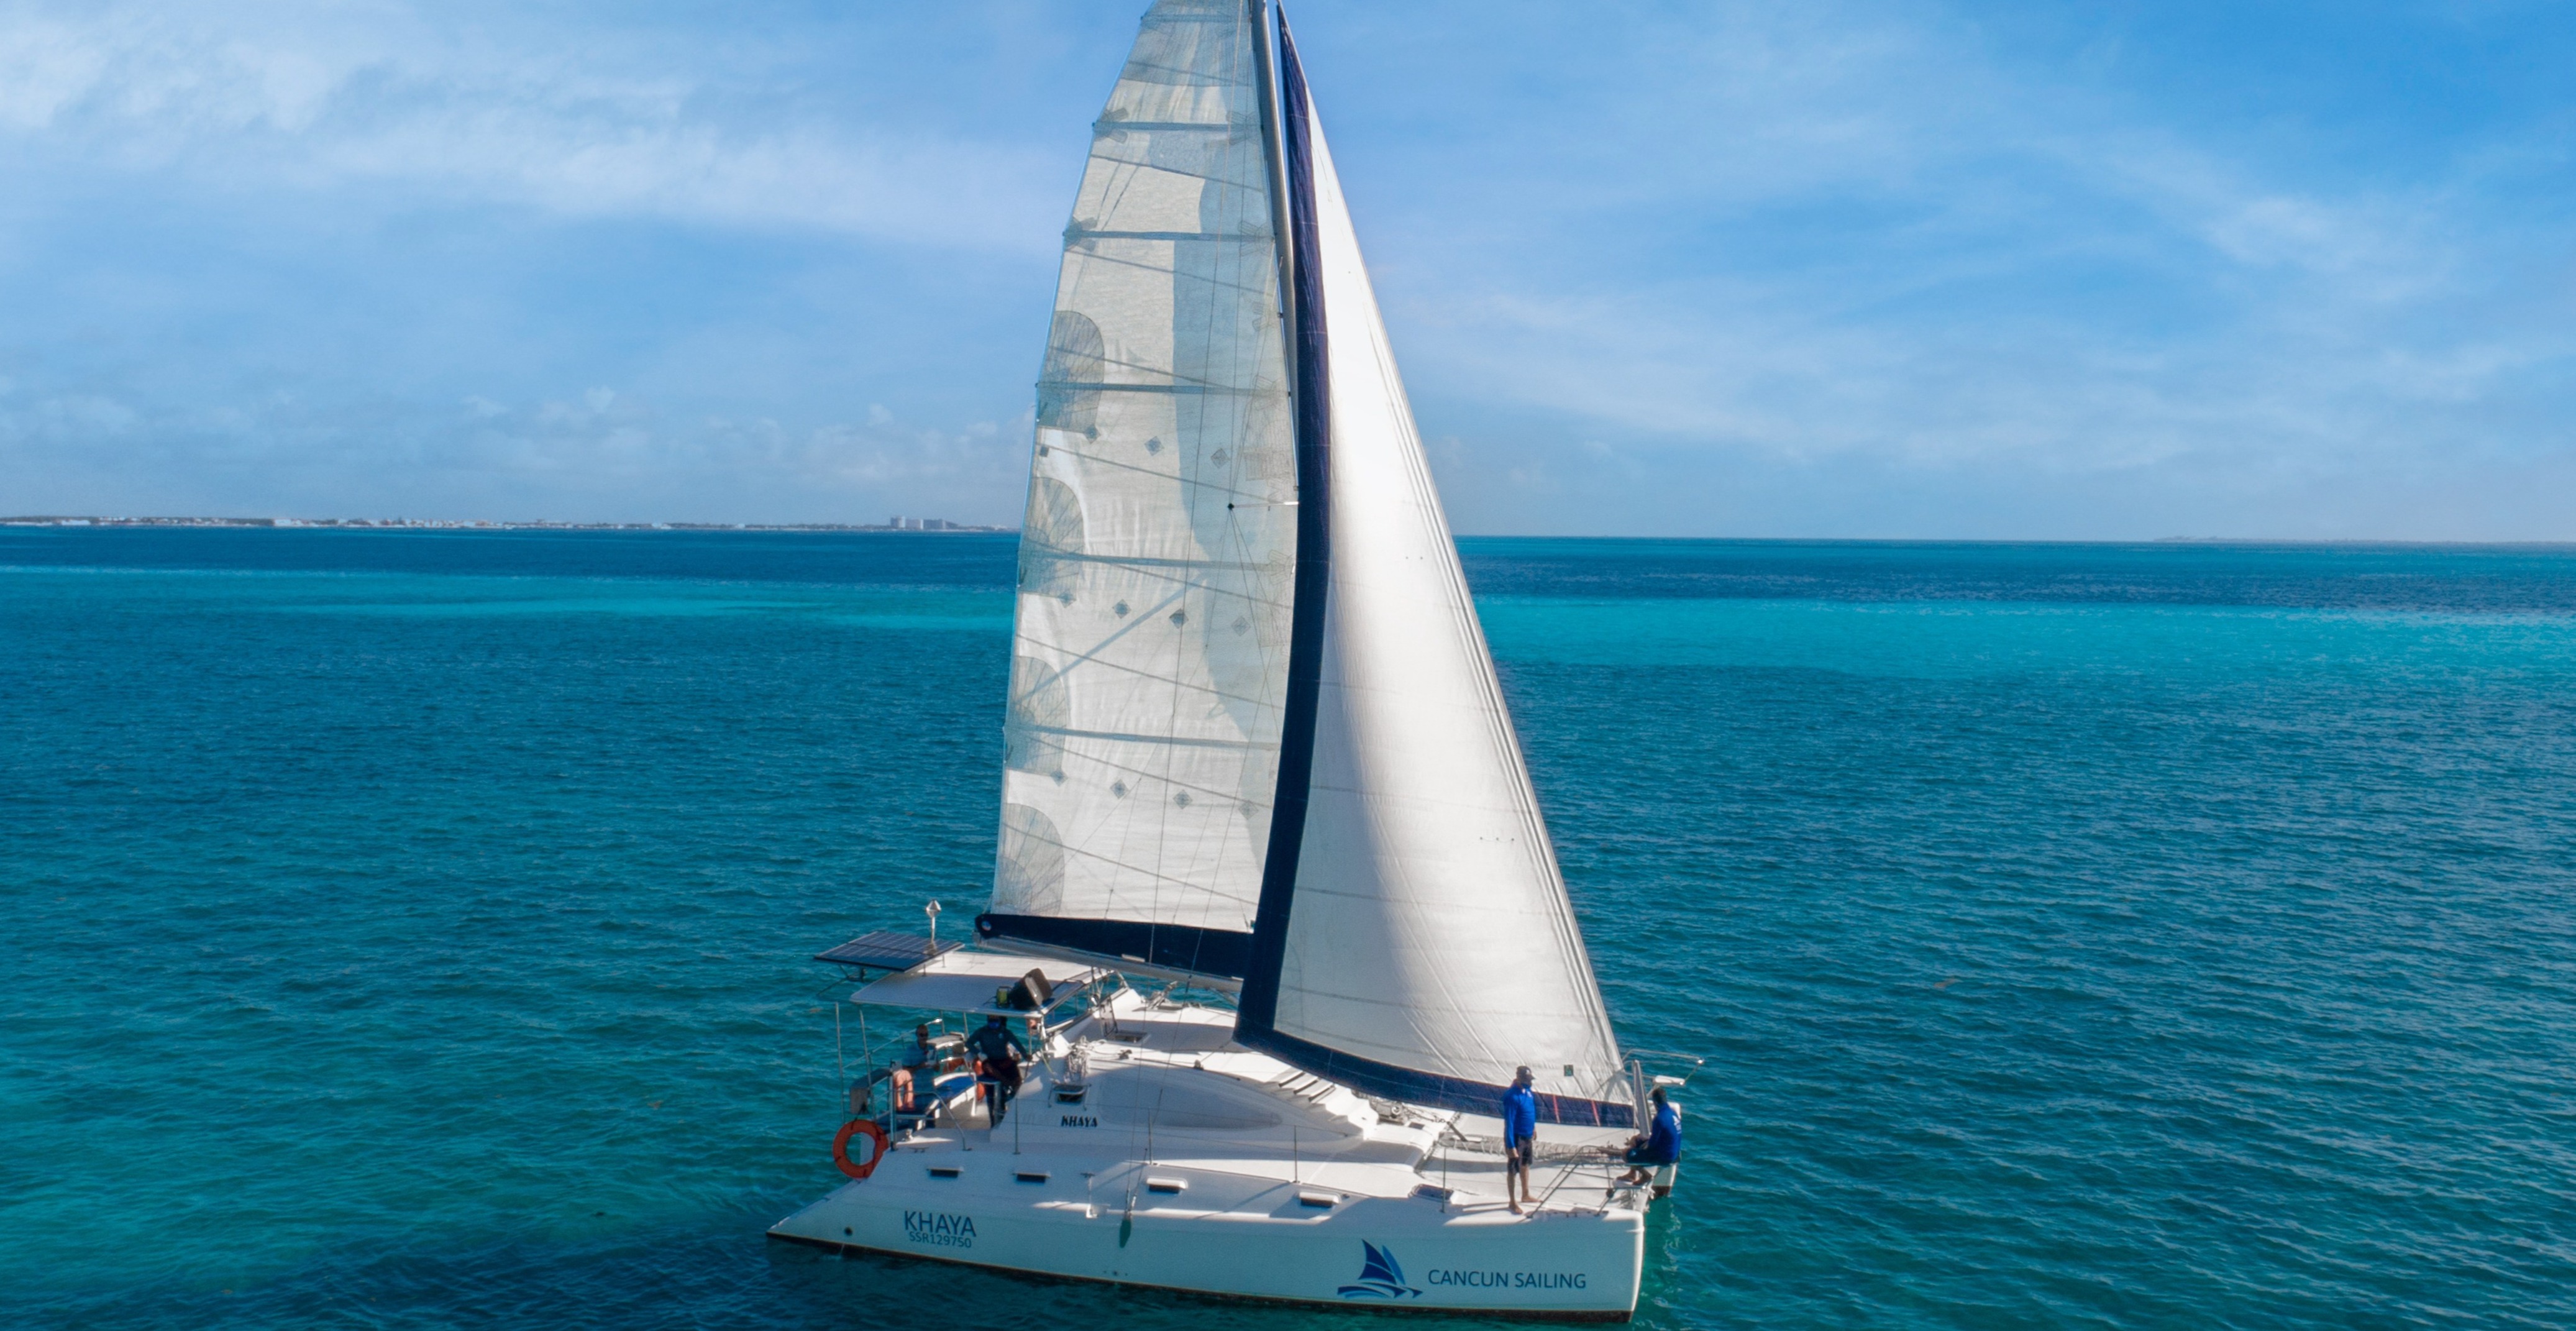 01 - HIRES - Khaya catamaran - Cancun Sailing